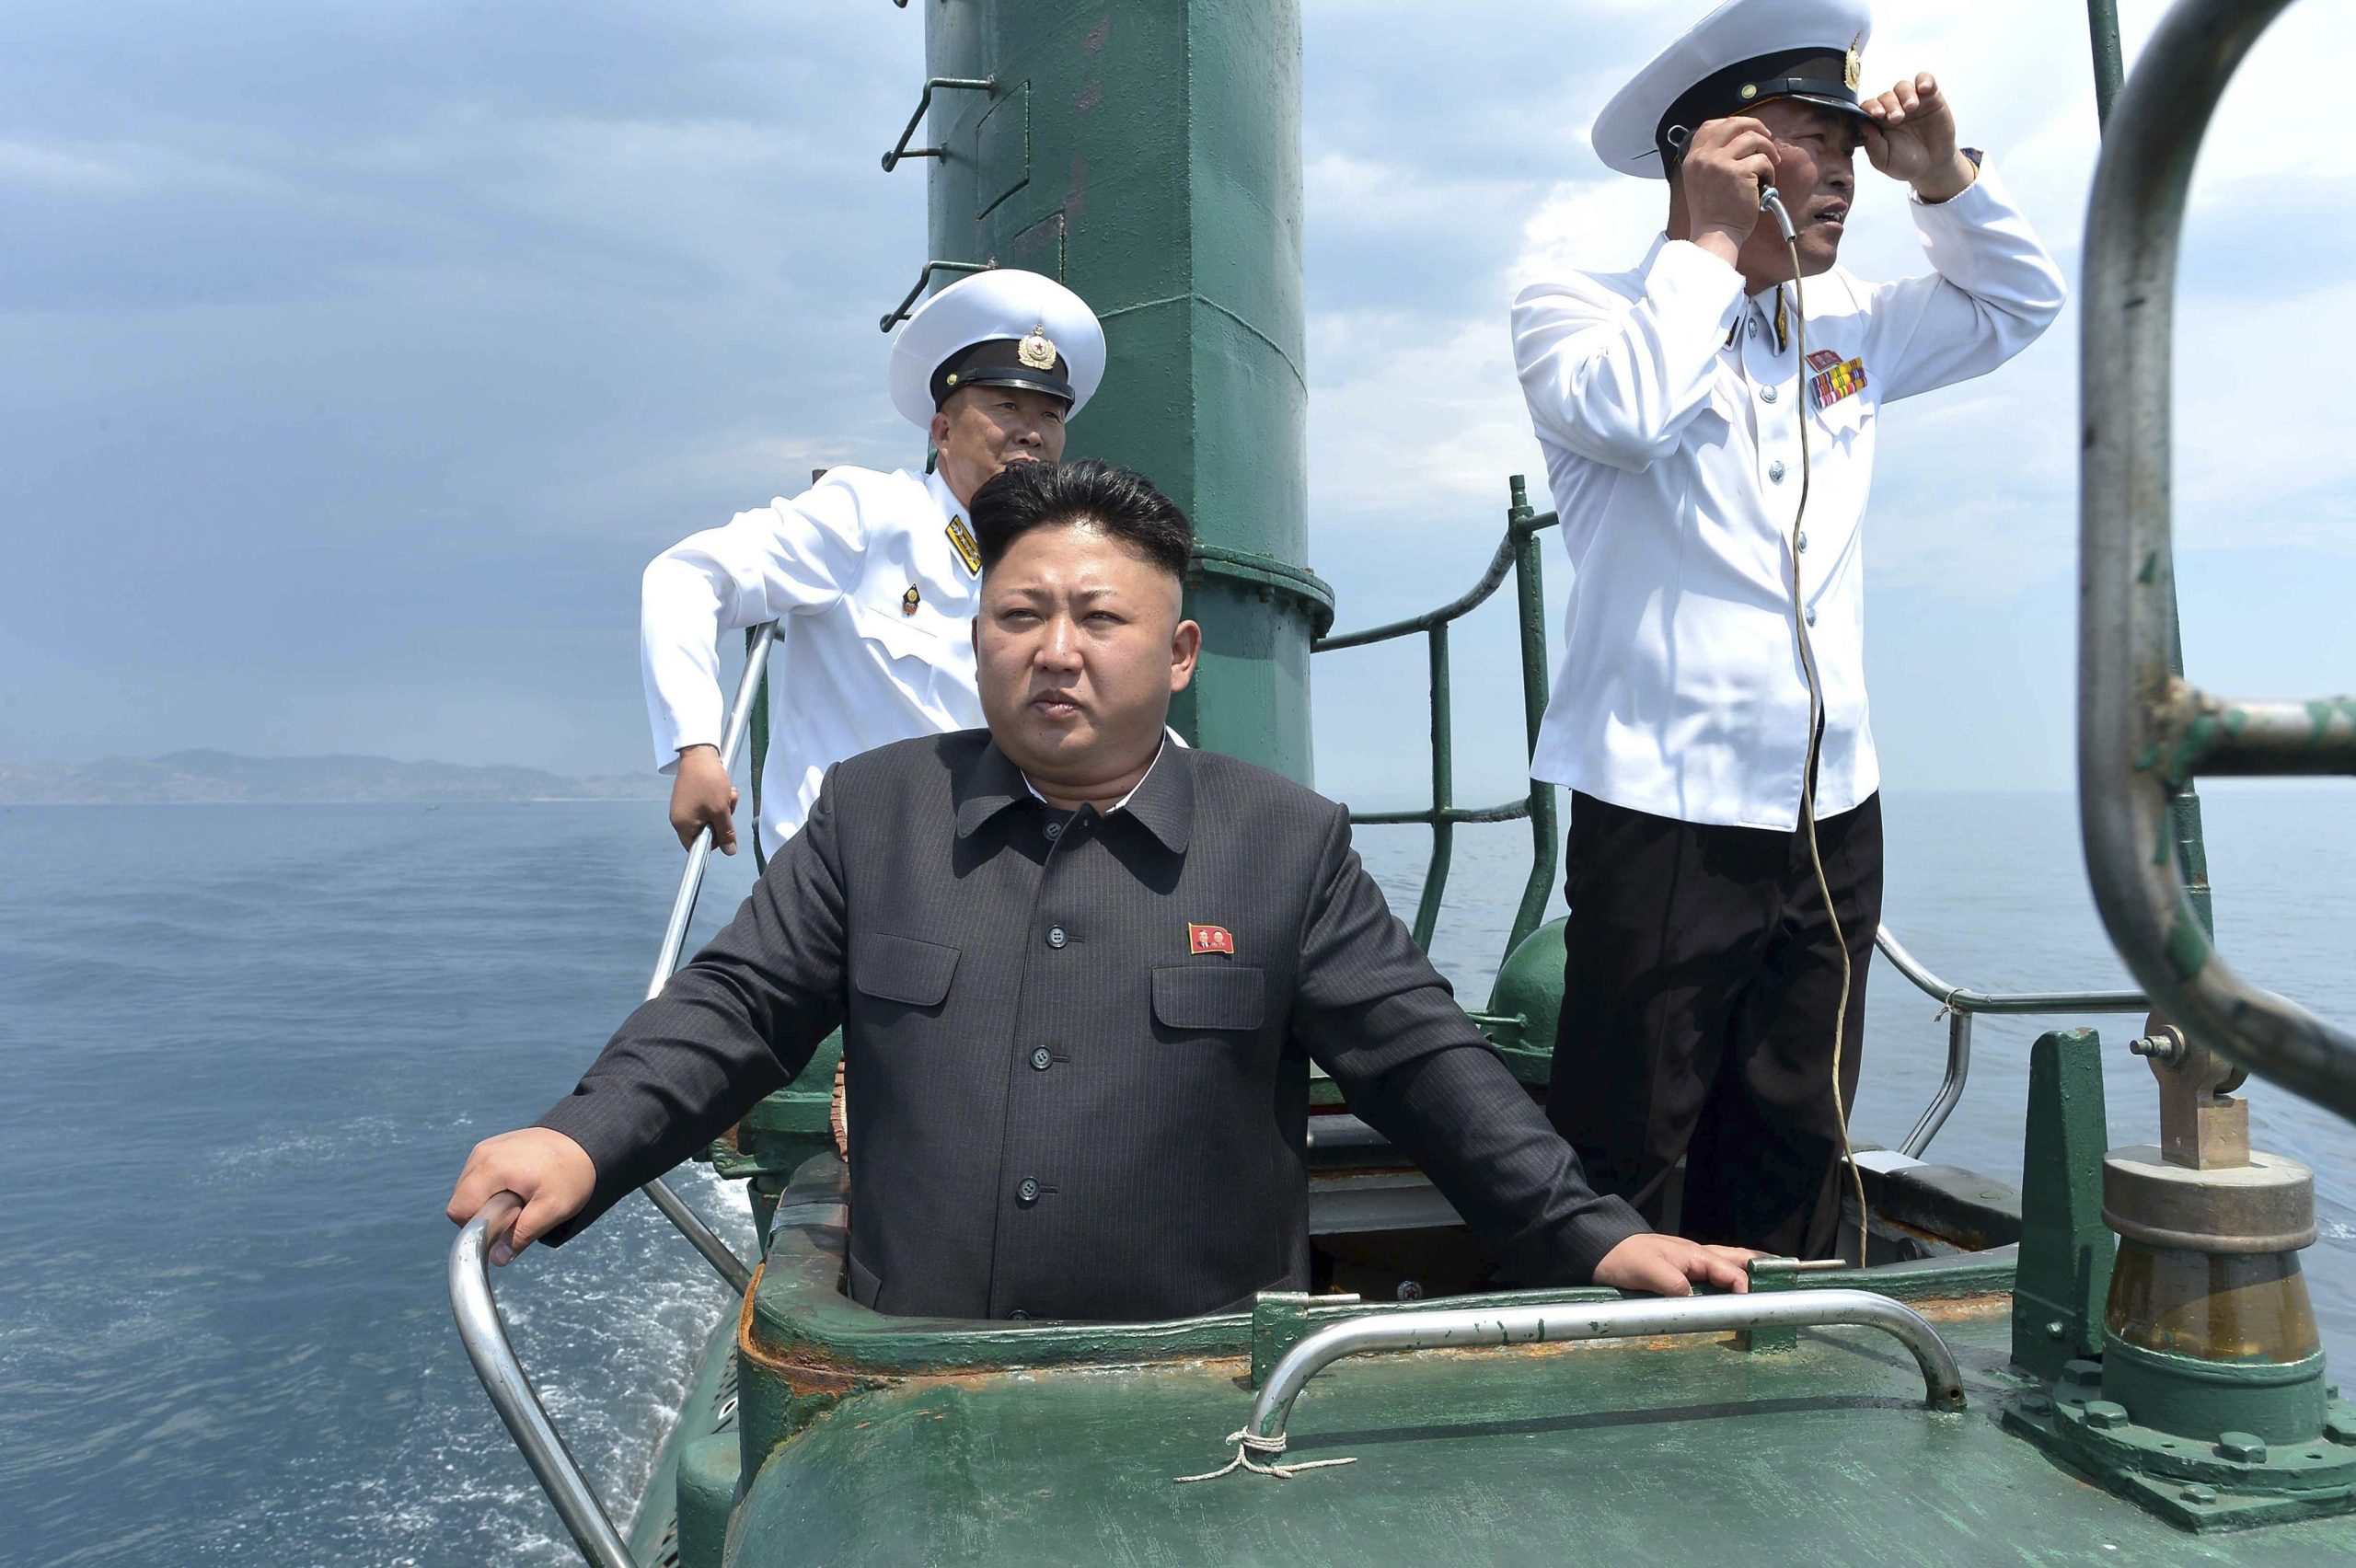 Casus belli για την Β. Κορέα ο ναυτικός αποκλεισμός: «Ο Ντ. Τραμπ μας οδηγεί σε πυρηνικό πόλεμο!» (βίντεο)